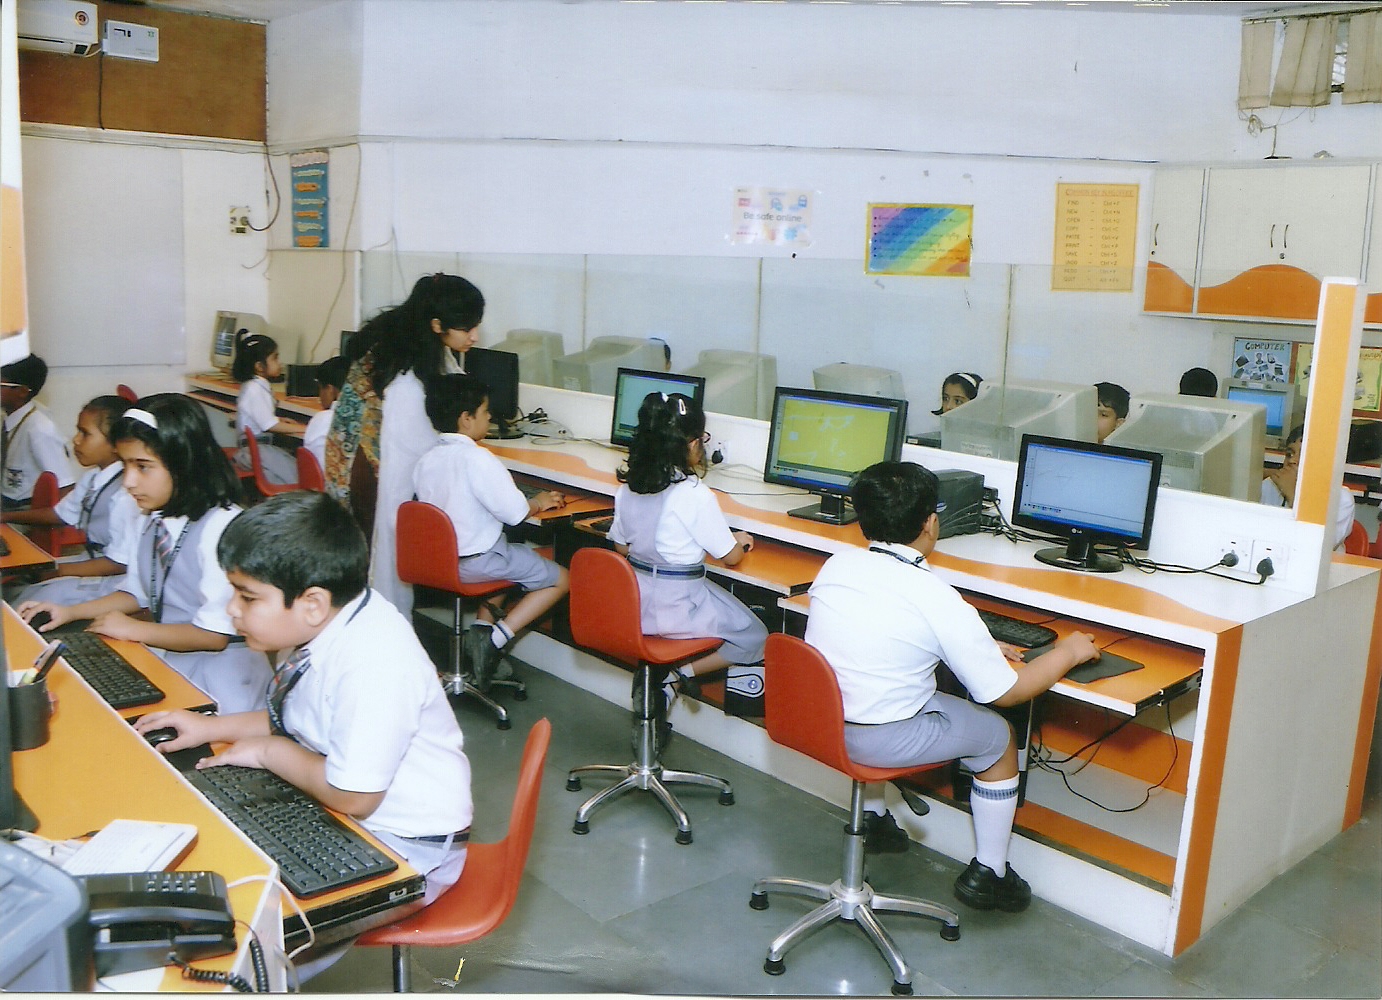 Открытая школа информатика. Скул Информатика. Пакистанцы за компьютерами. Пищевой компьютер School. School Computer Room.